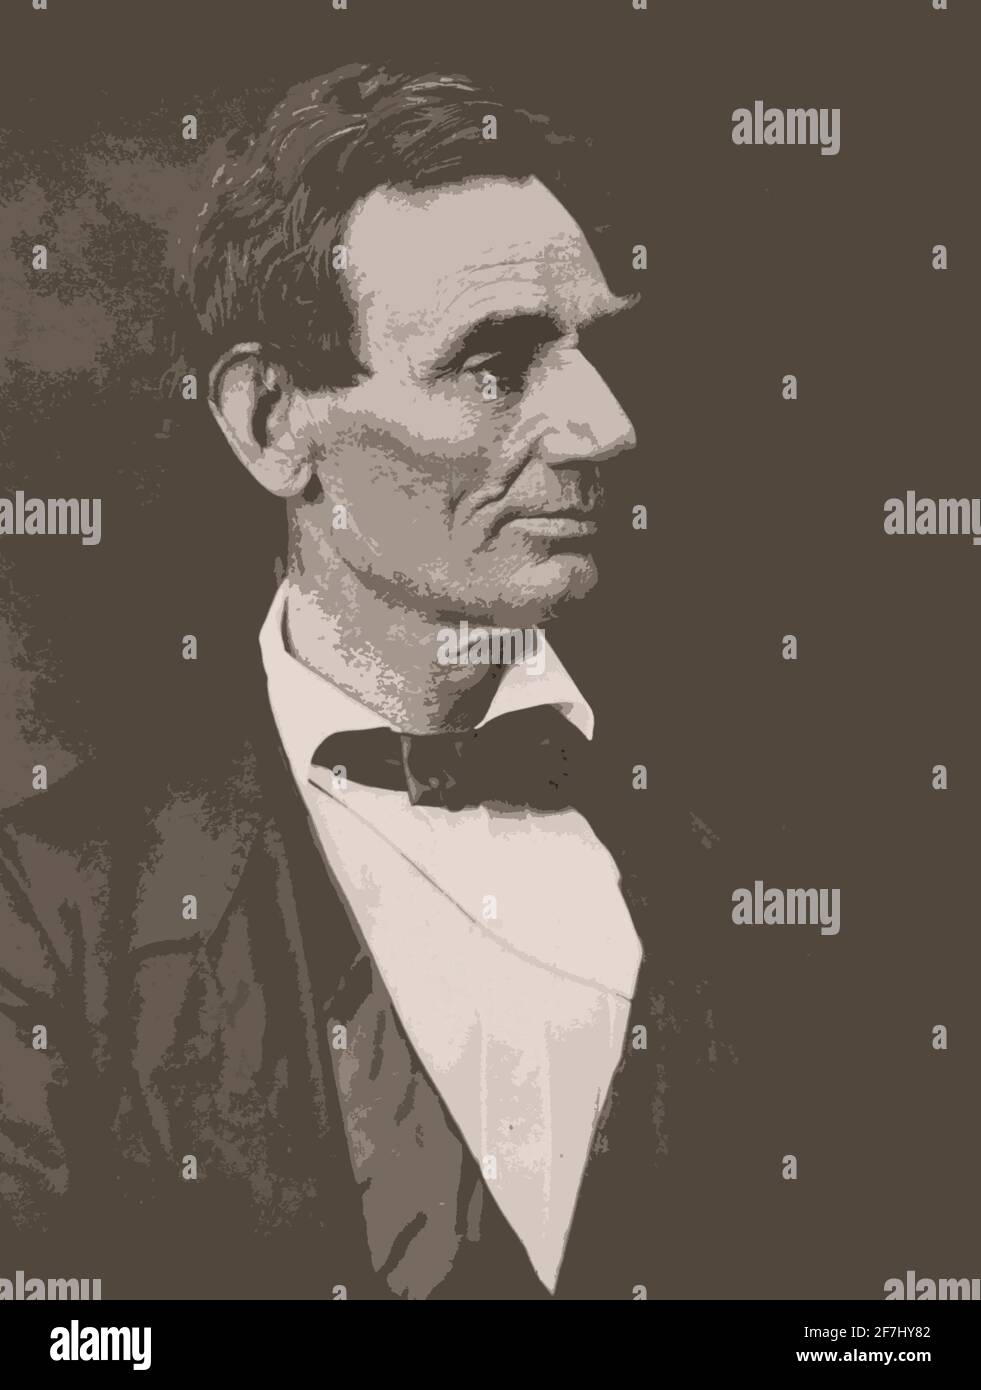 534px-Abraham_Lincoln_seated,_Feb_9,_1864.jpg